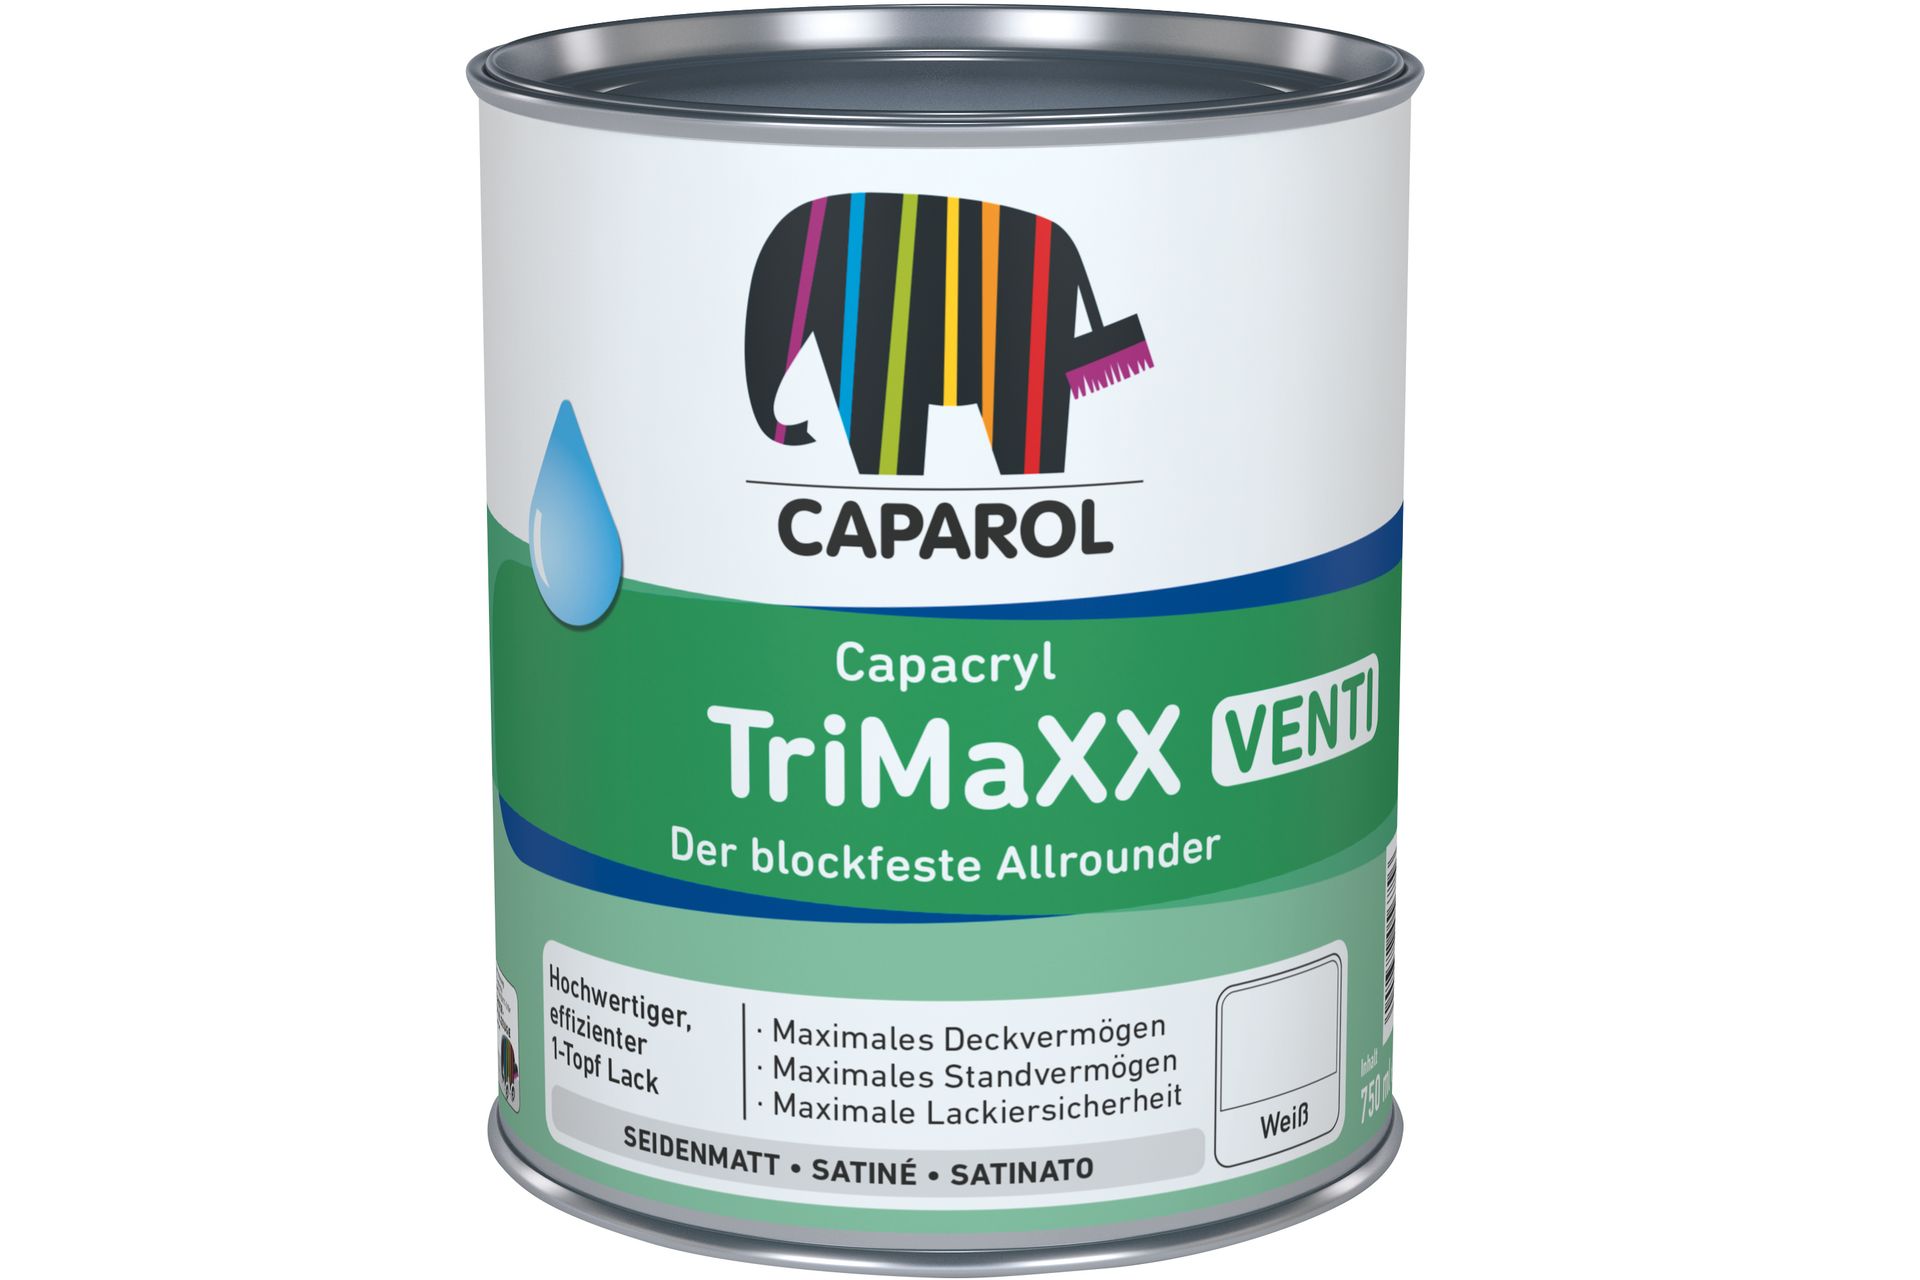 Caparol Capacryl TriMaXX Venti